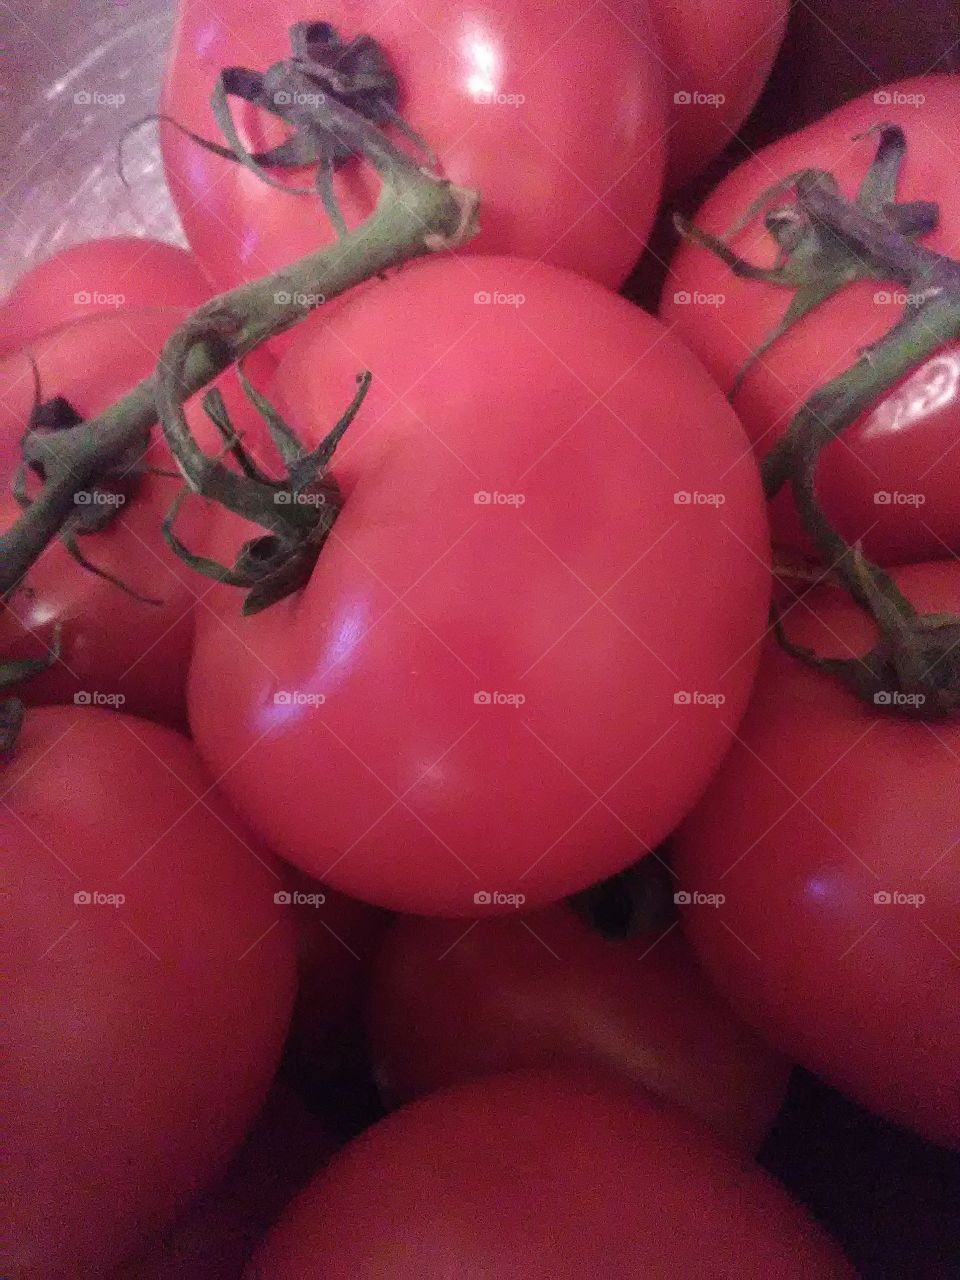 fresh garden tomatoes ready and sunripe .